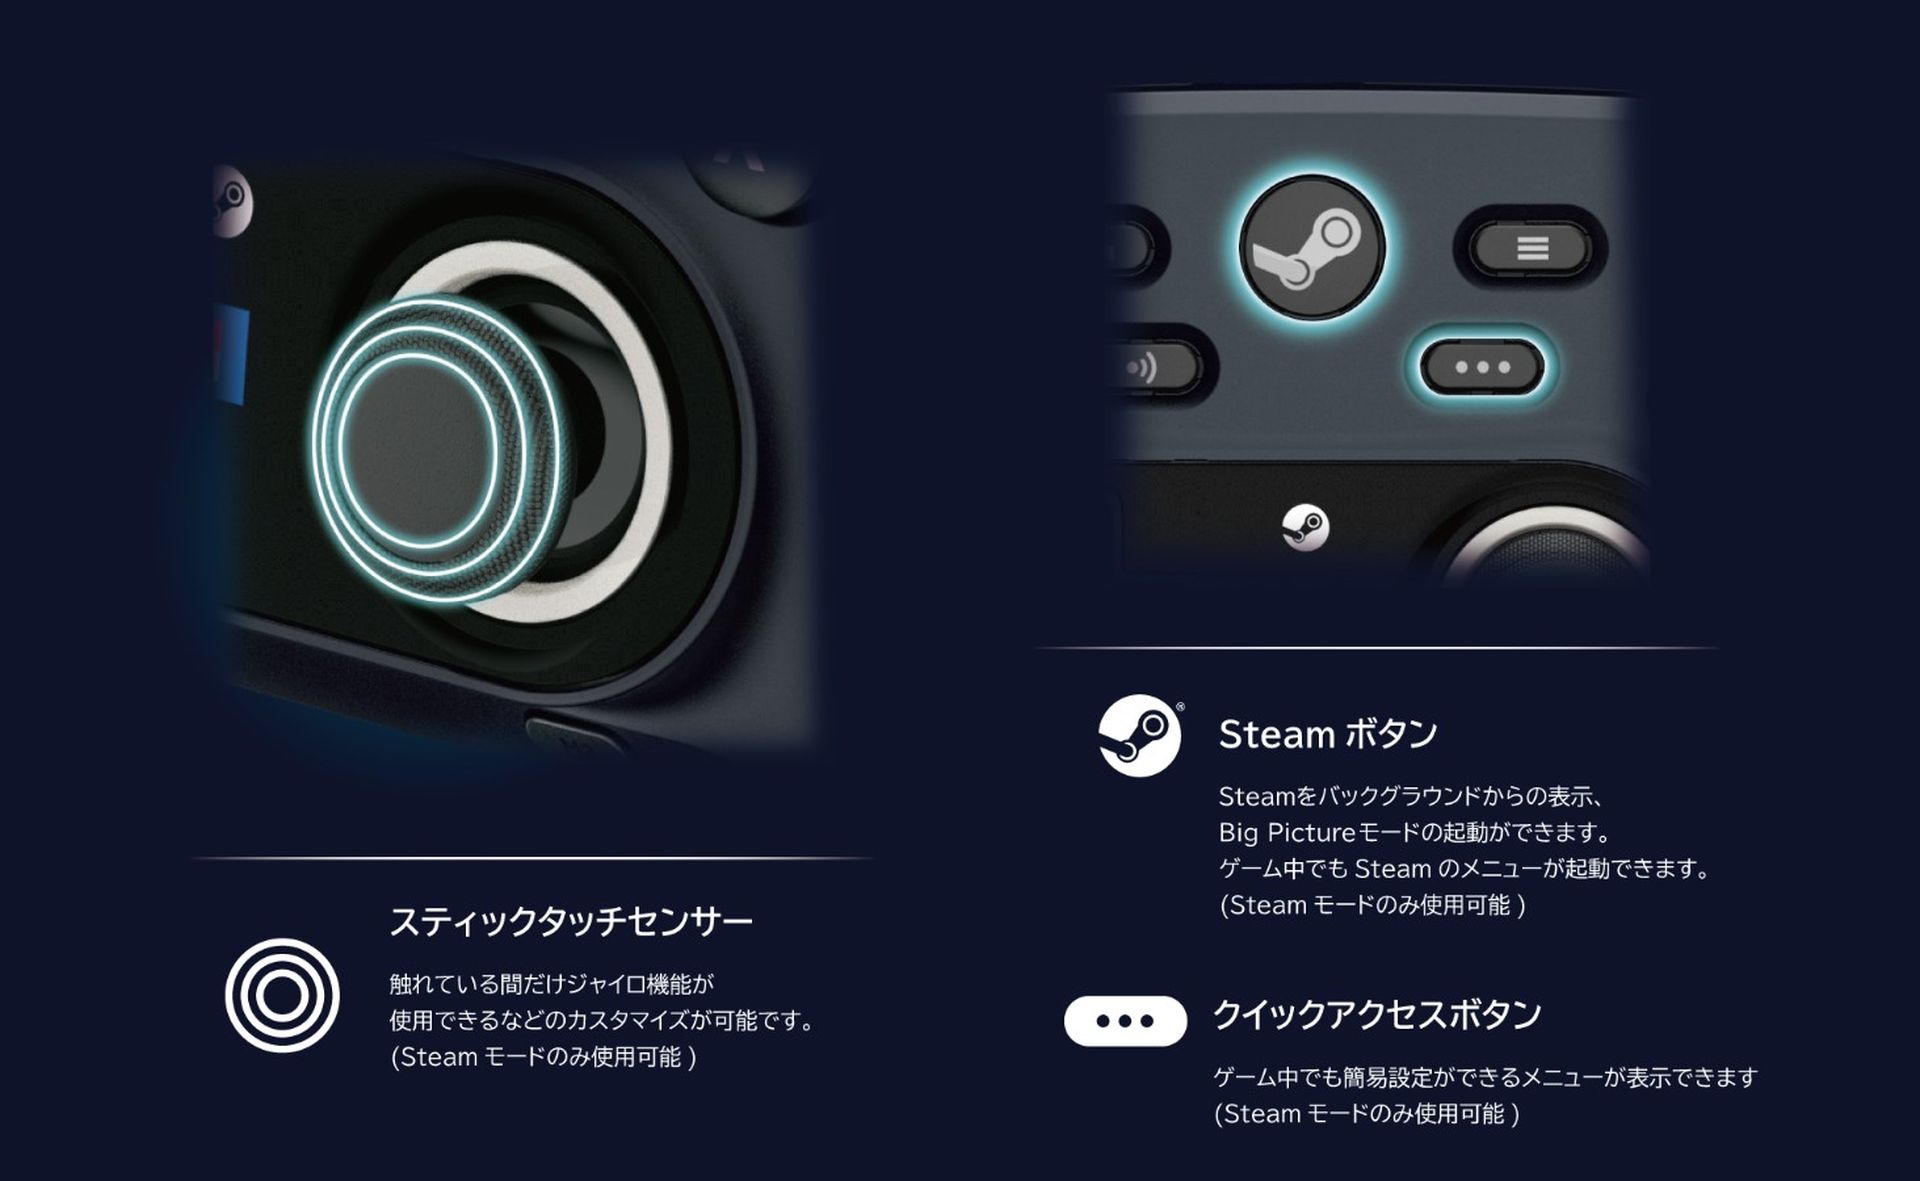 Hori Steam Controller 공개: 기능, 가격 및 출시 날짜는 다음과 같습니다.